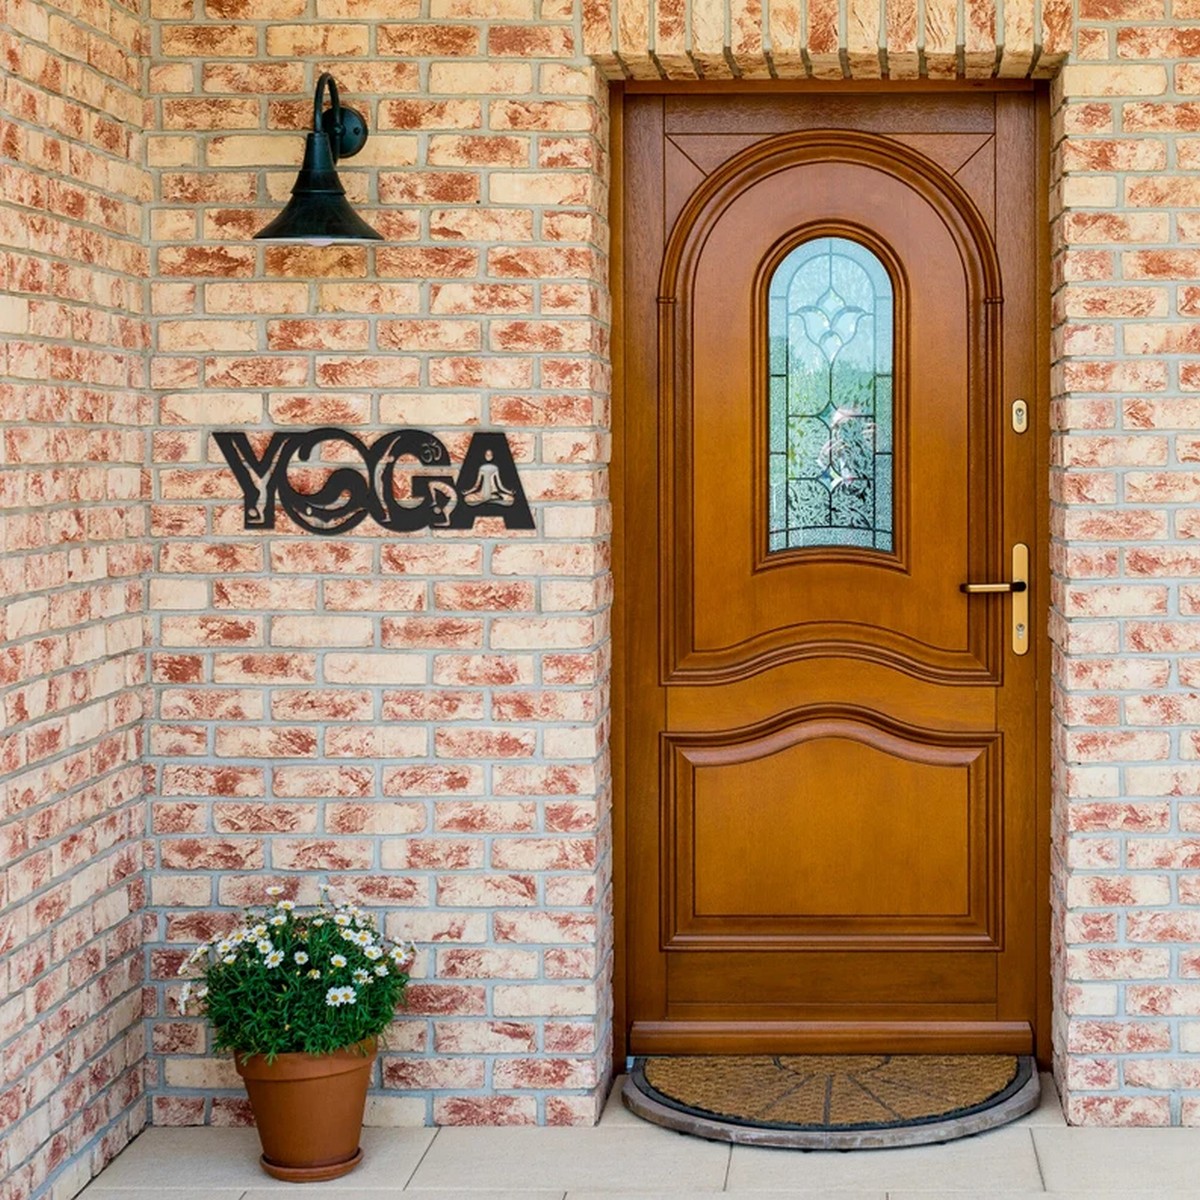 Yoga studio wall art: How to create a zen den for your yoga practice